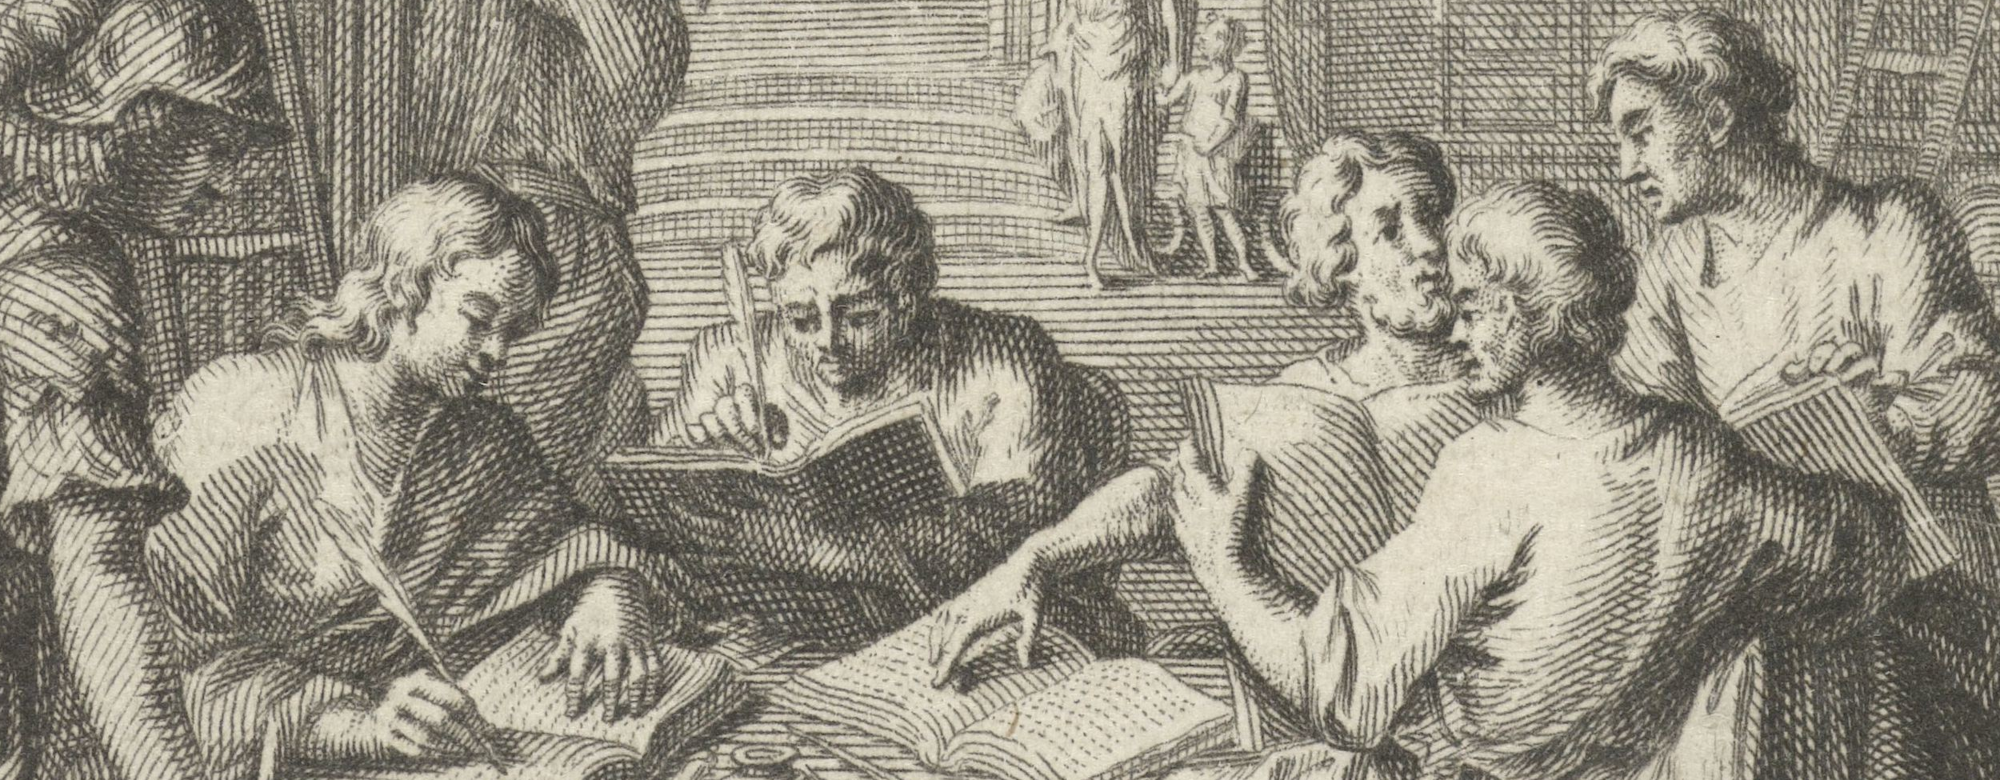 Etching of scholars in a library by Adolf van der Laan.